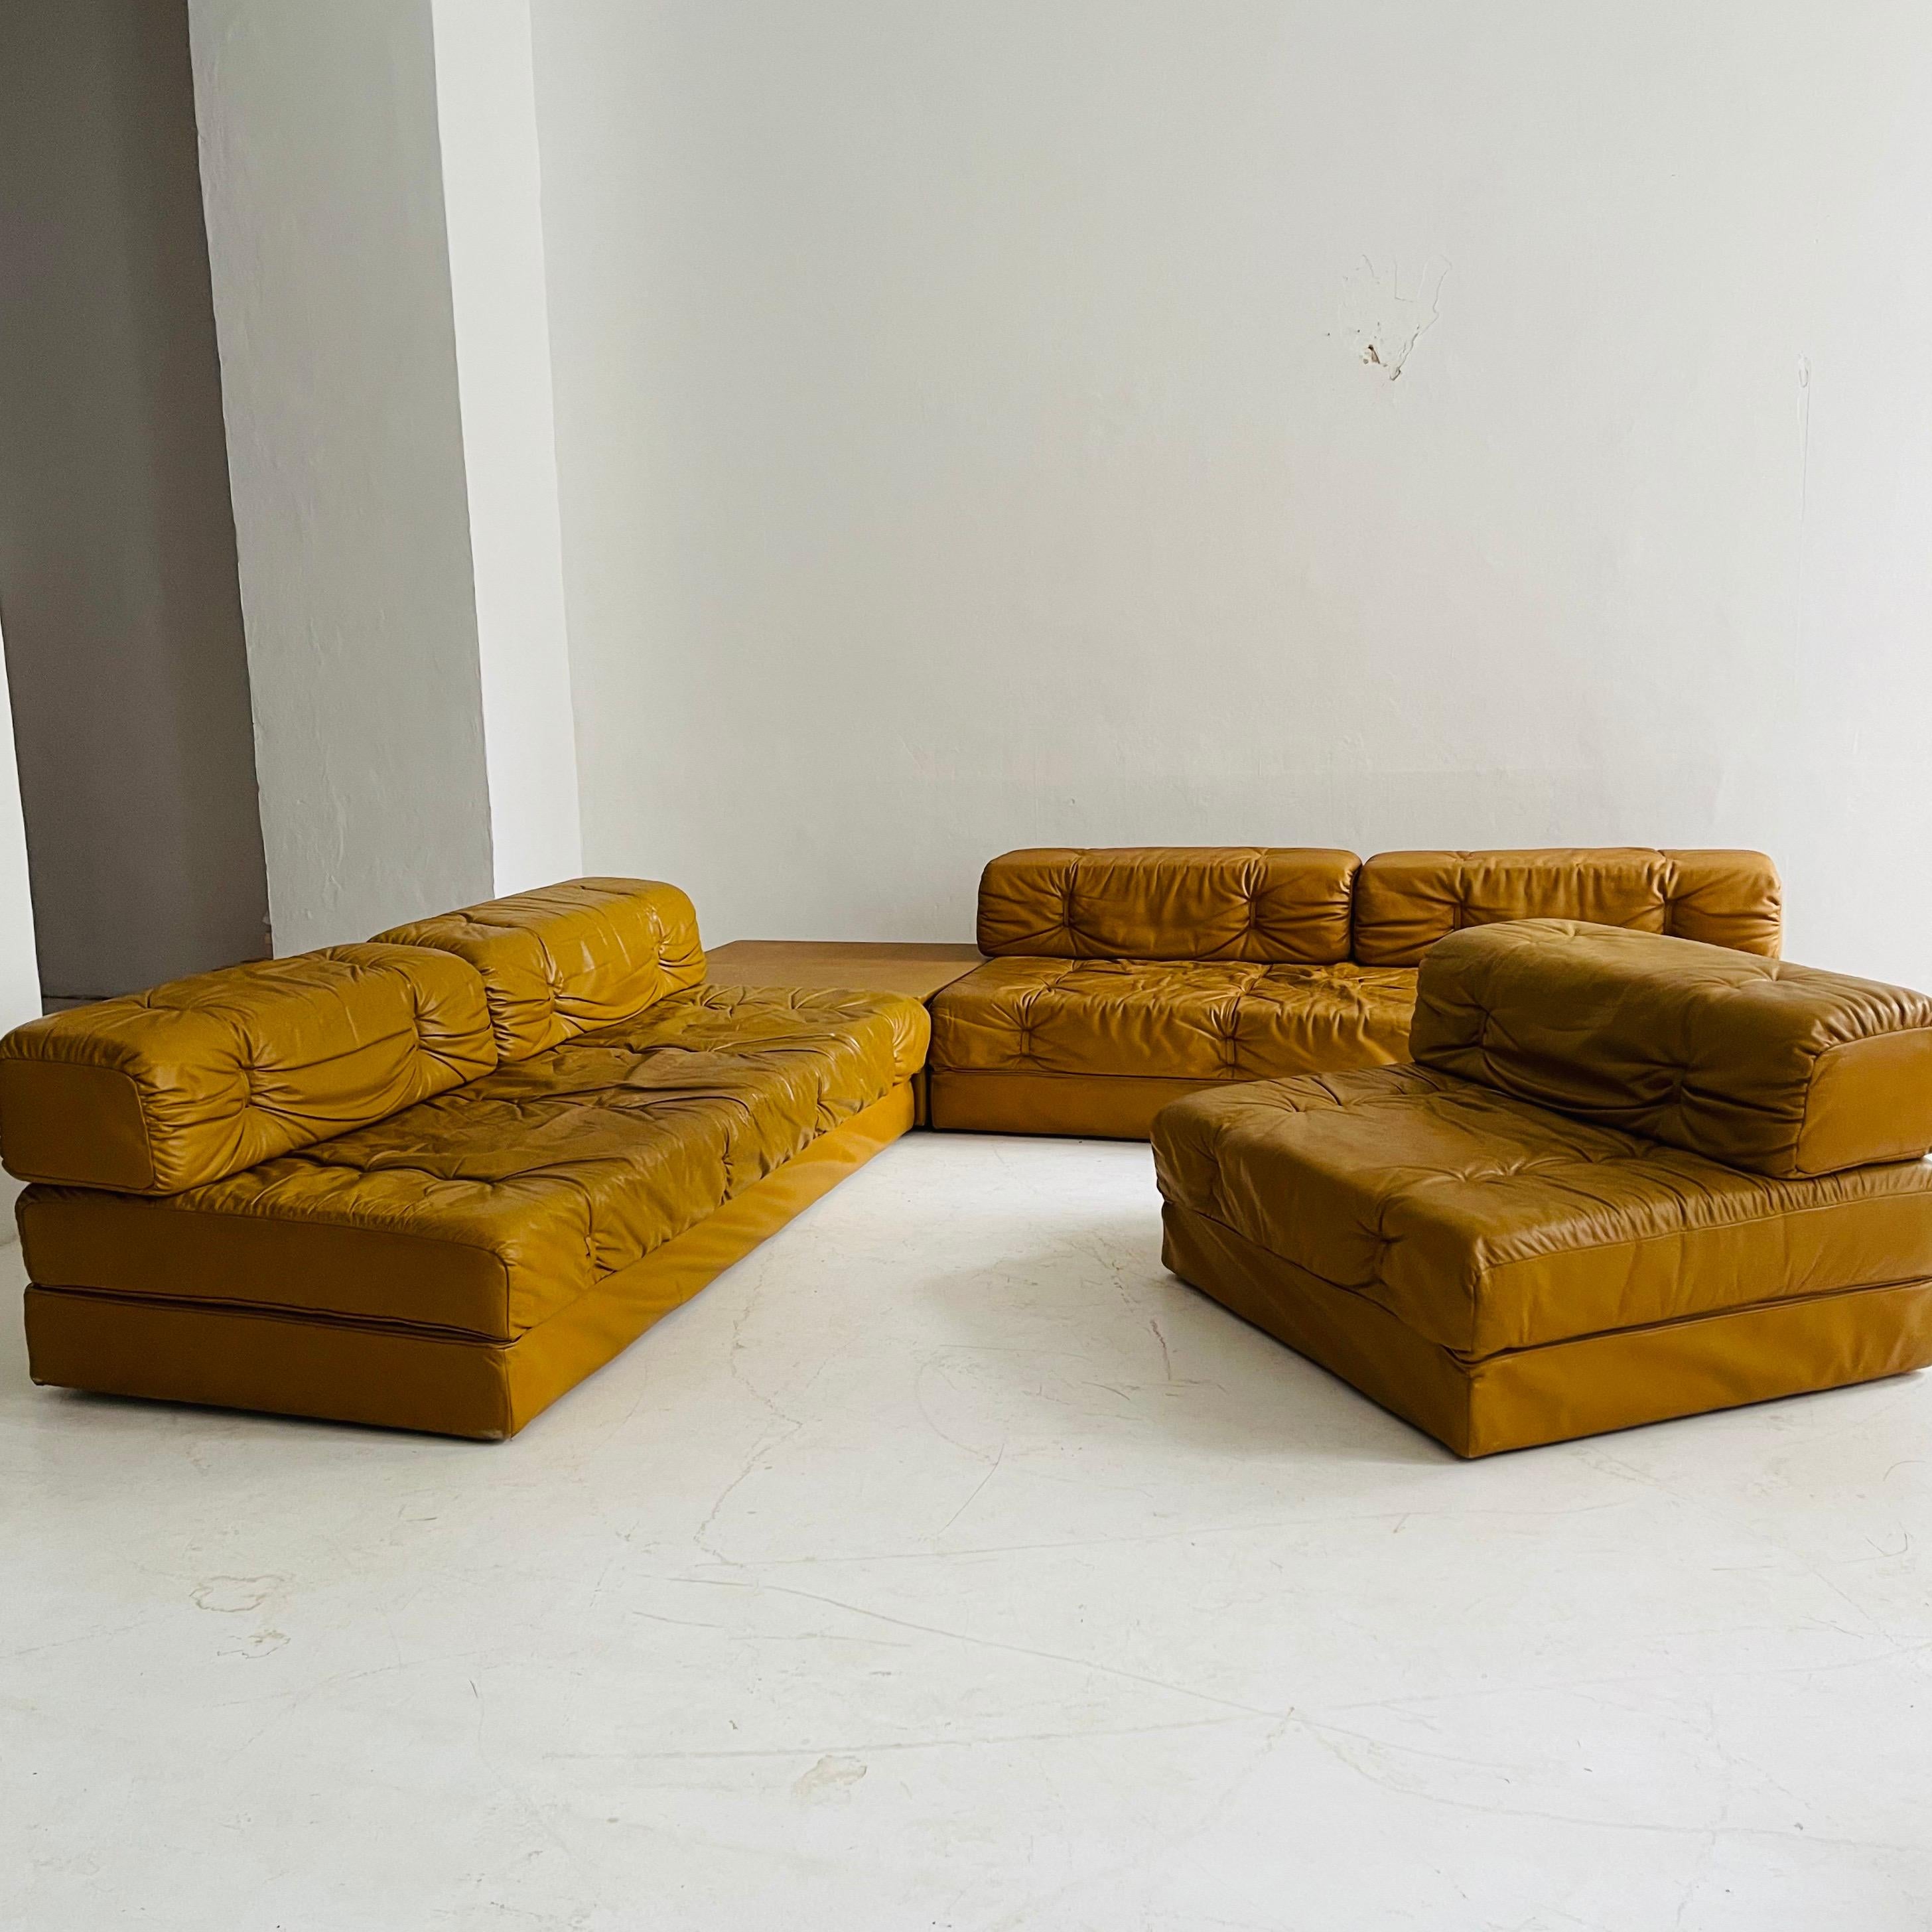 Wittmann Atrium Cognac Leather Living Room Suite Sofa Daybeds, Austria, 1970s For Sale 6